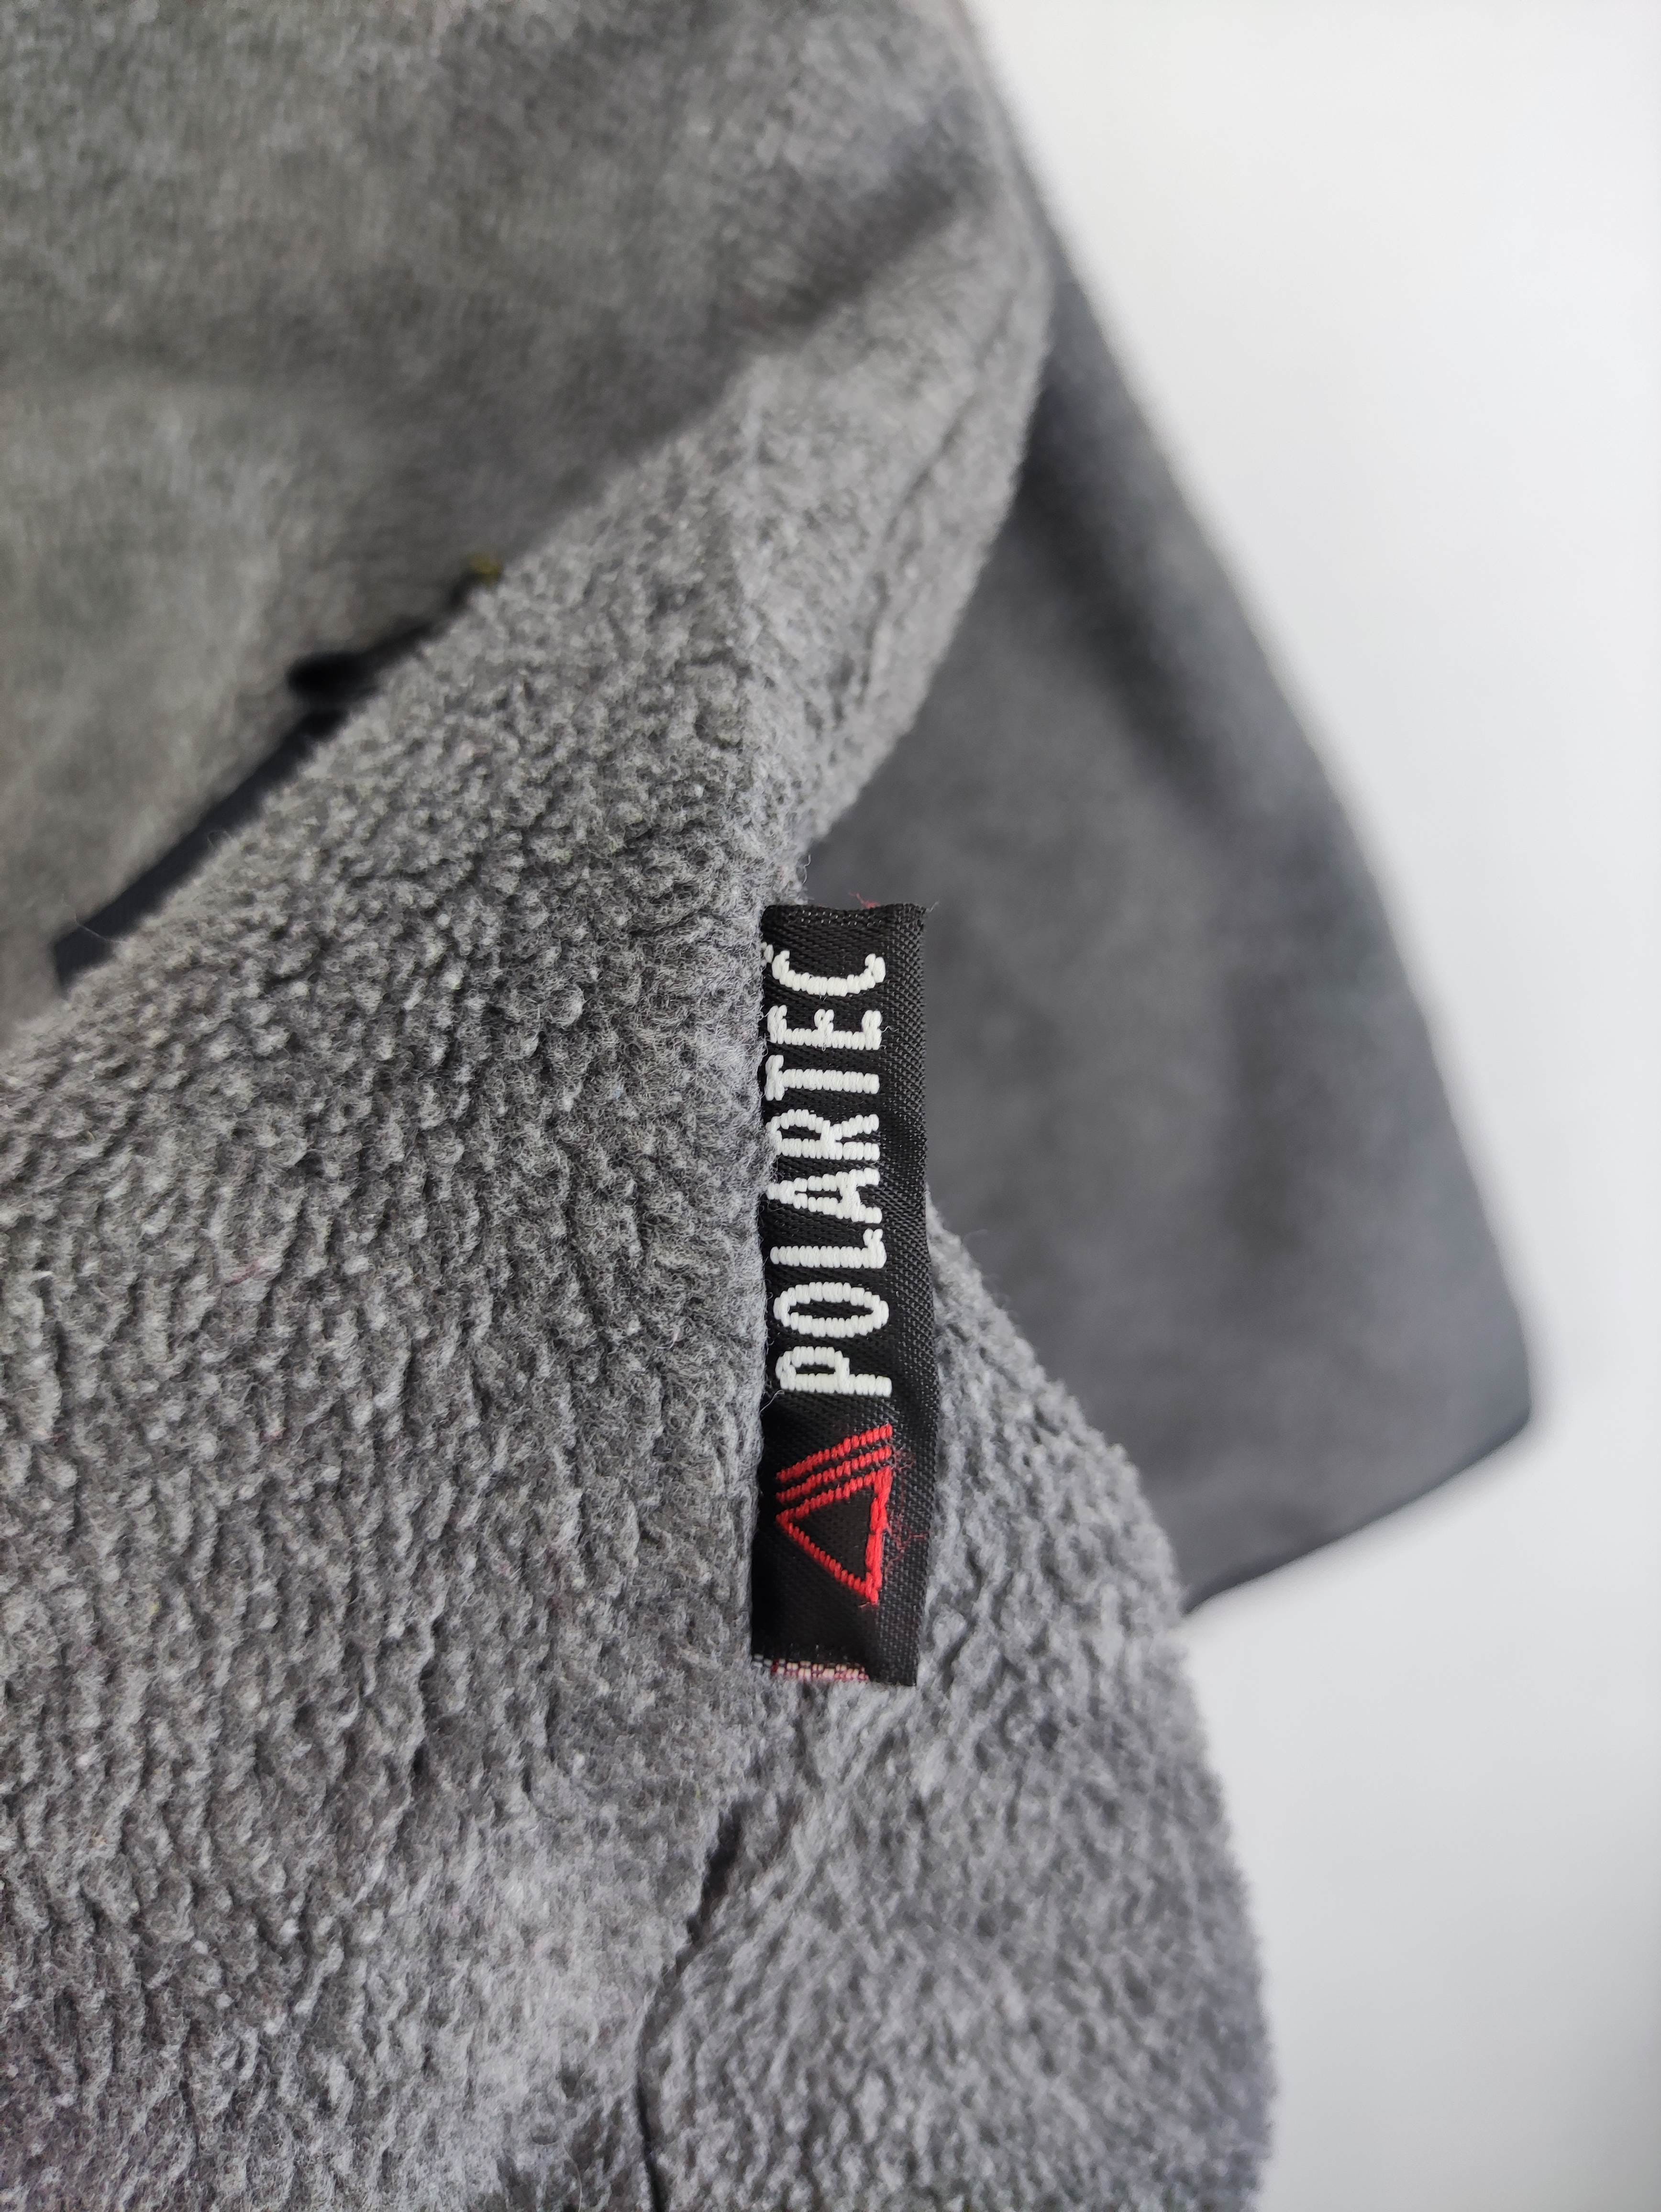 Vintage Woolrich Fleece Sweater Half Snap Button - 2